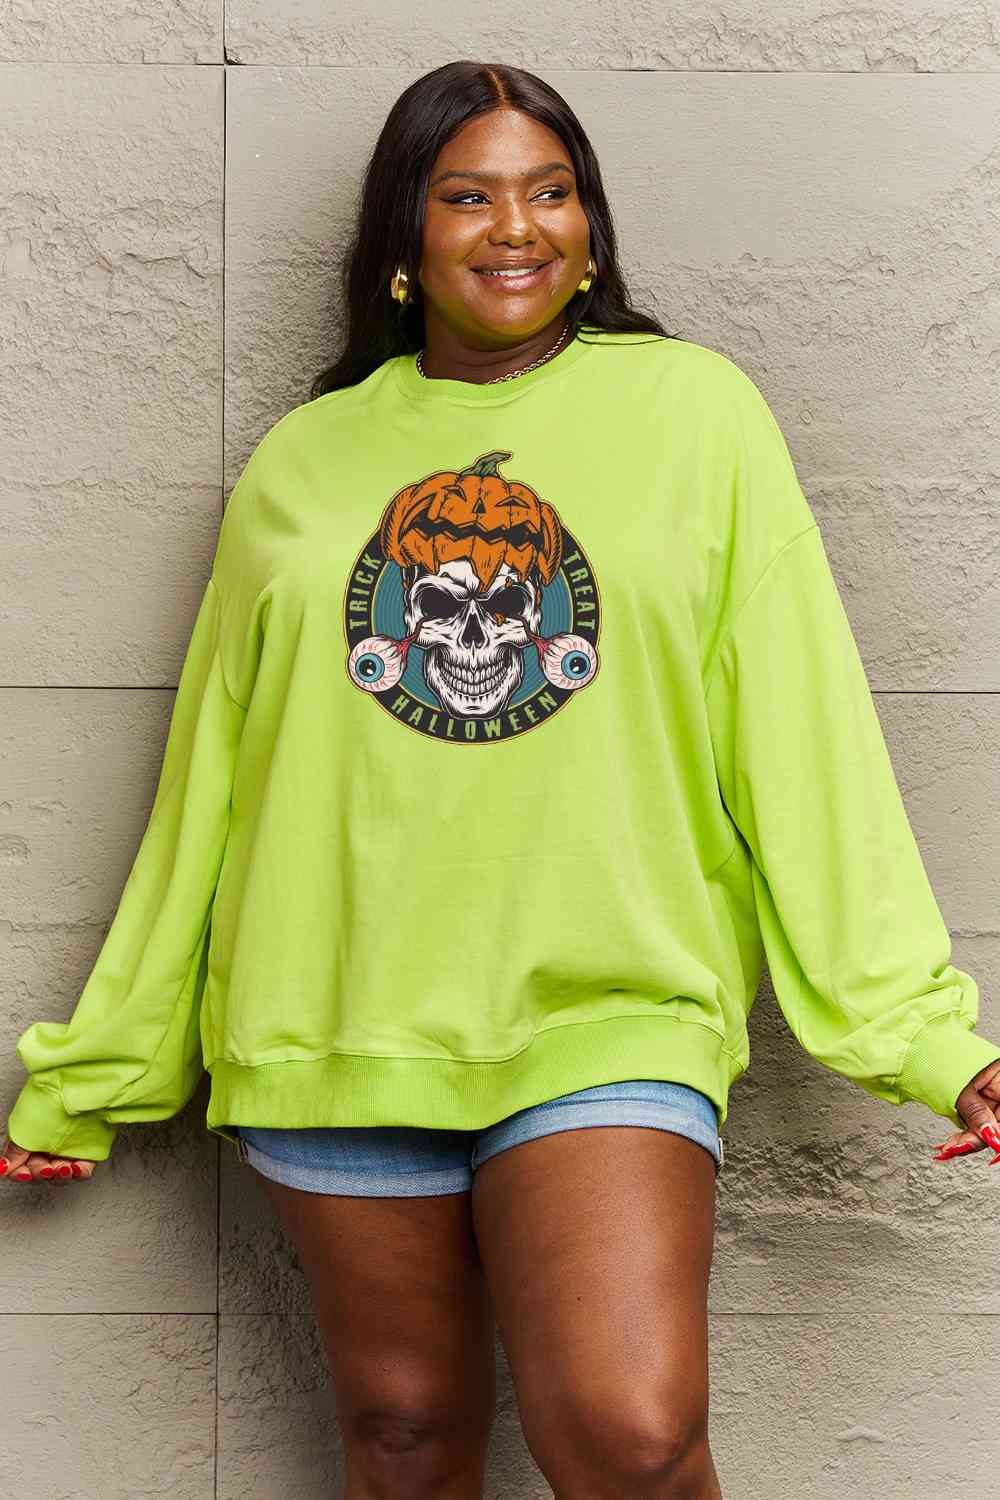 Simply Love Full Size Skull Graphic Sweatshirt, MyriadMart